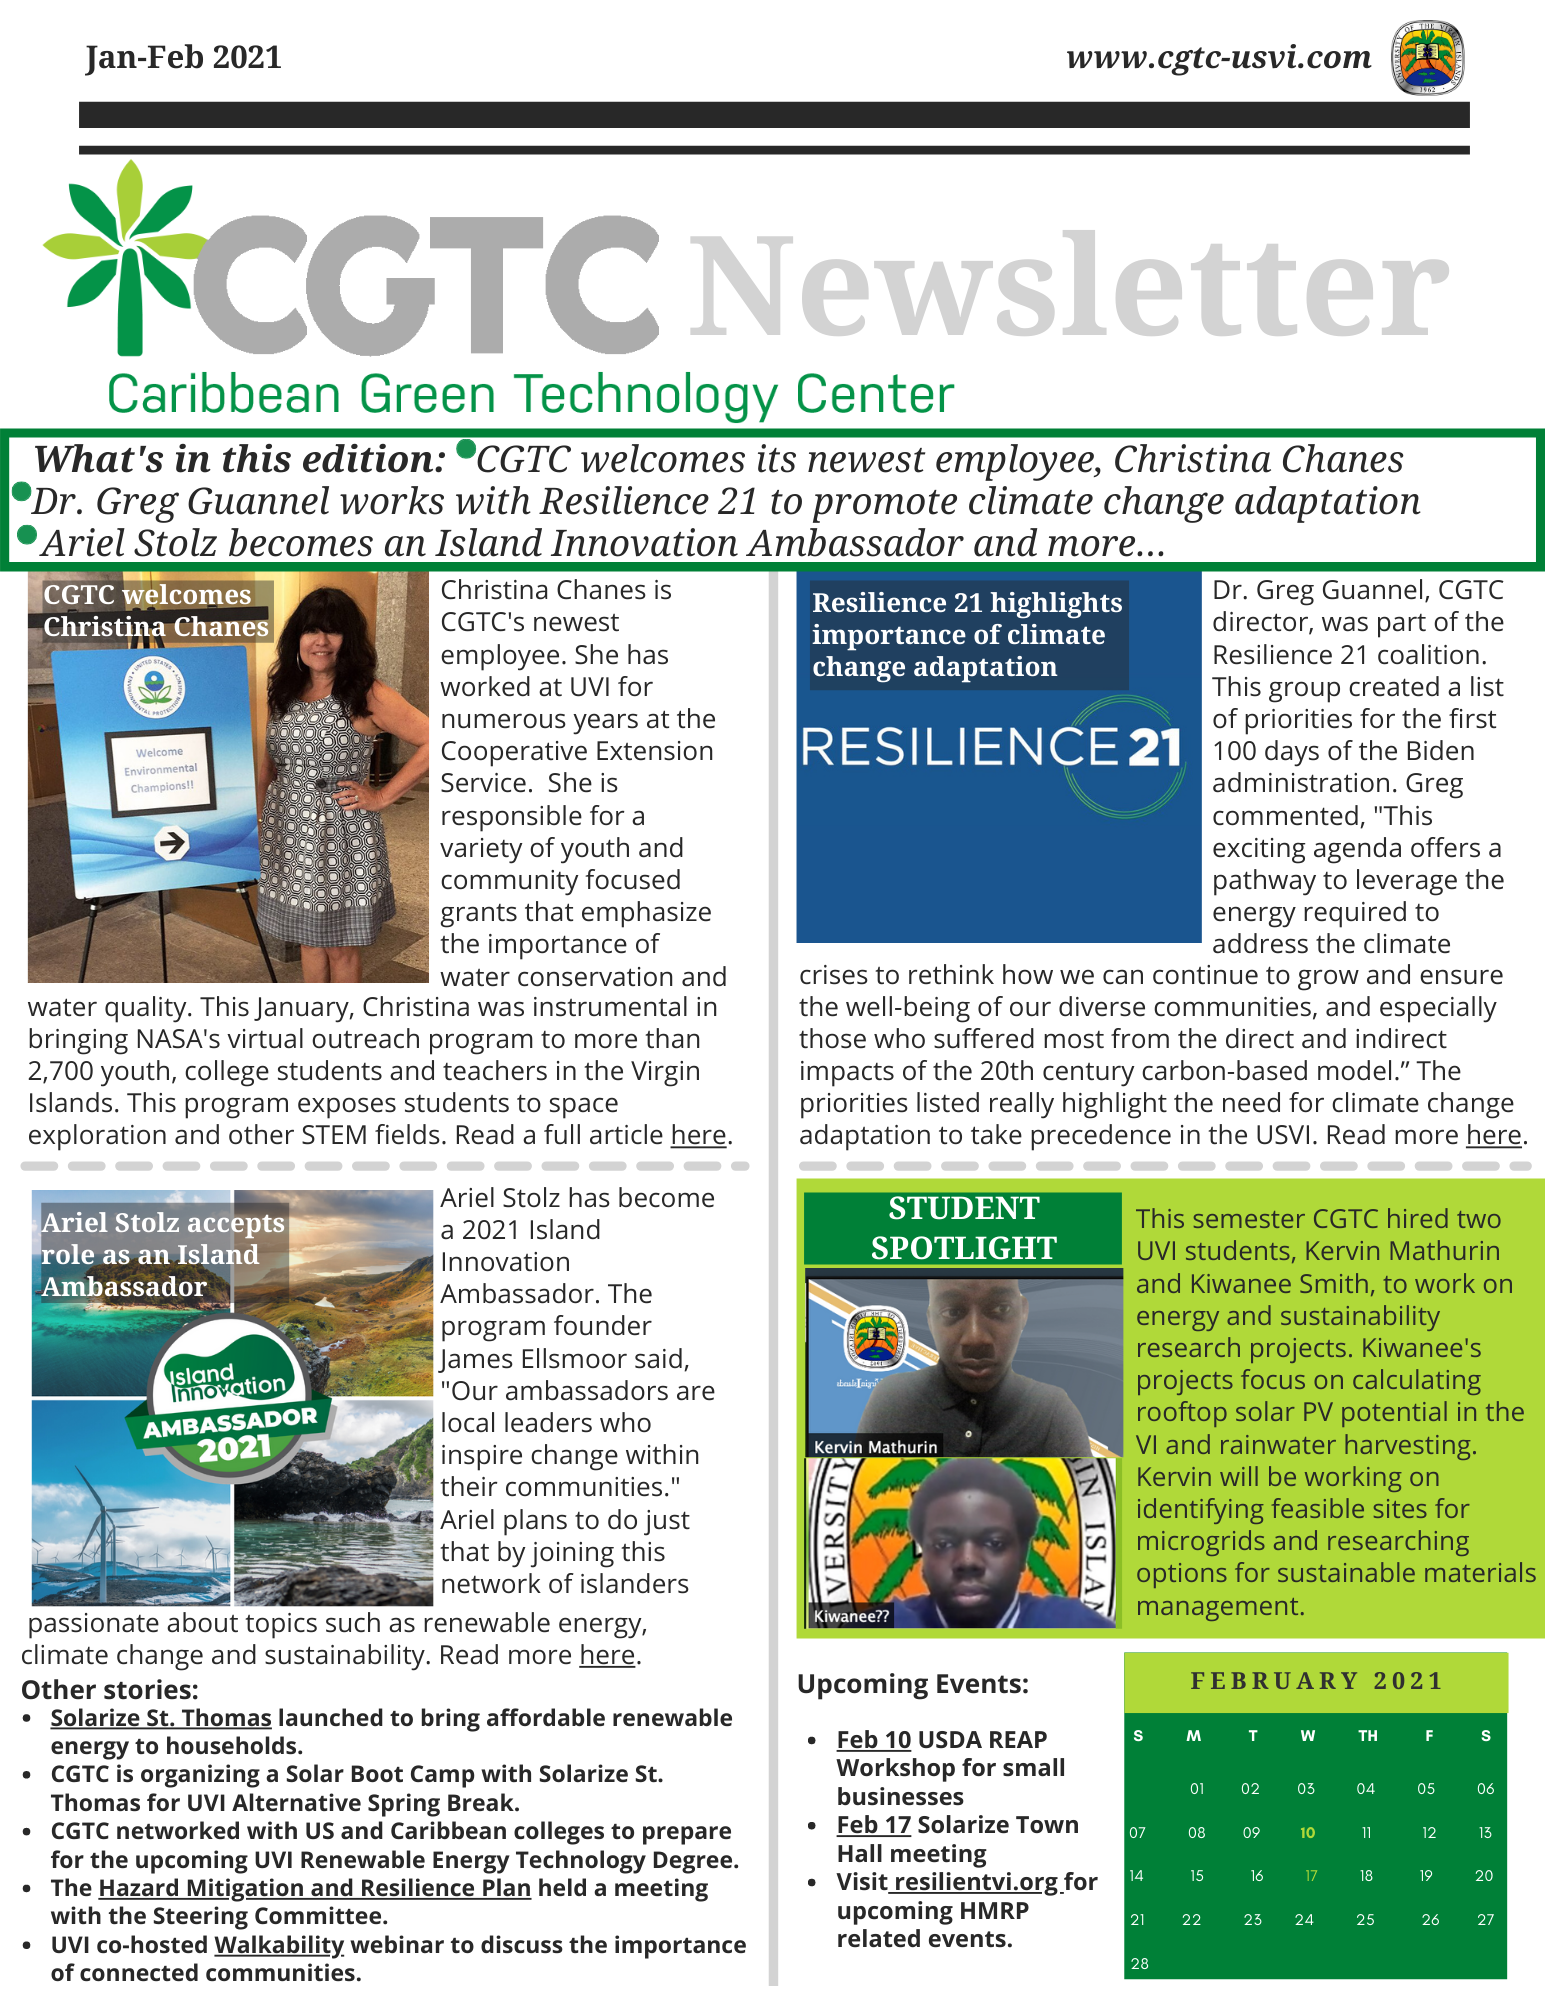 CGTC Newsletter Jan-Feb 2021